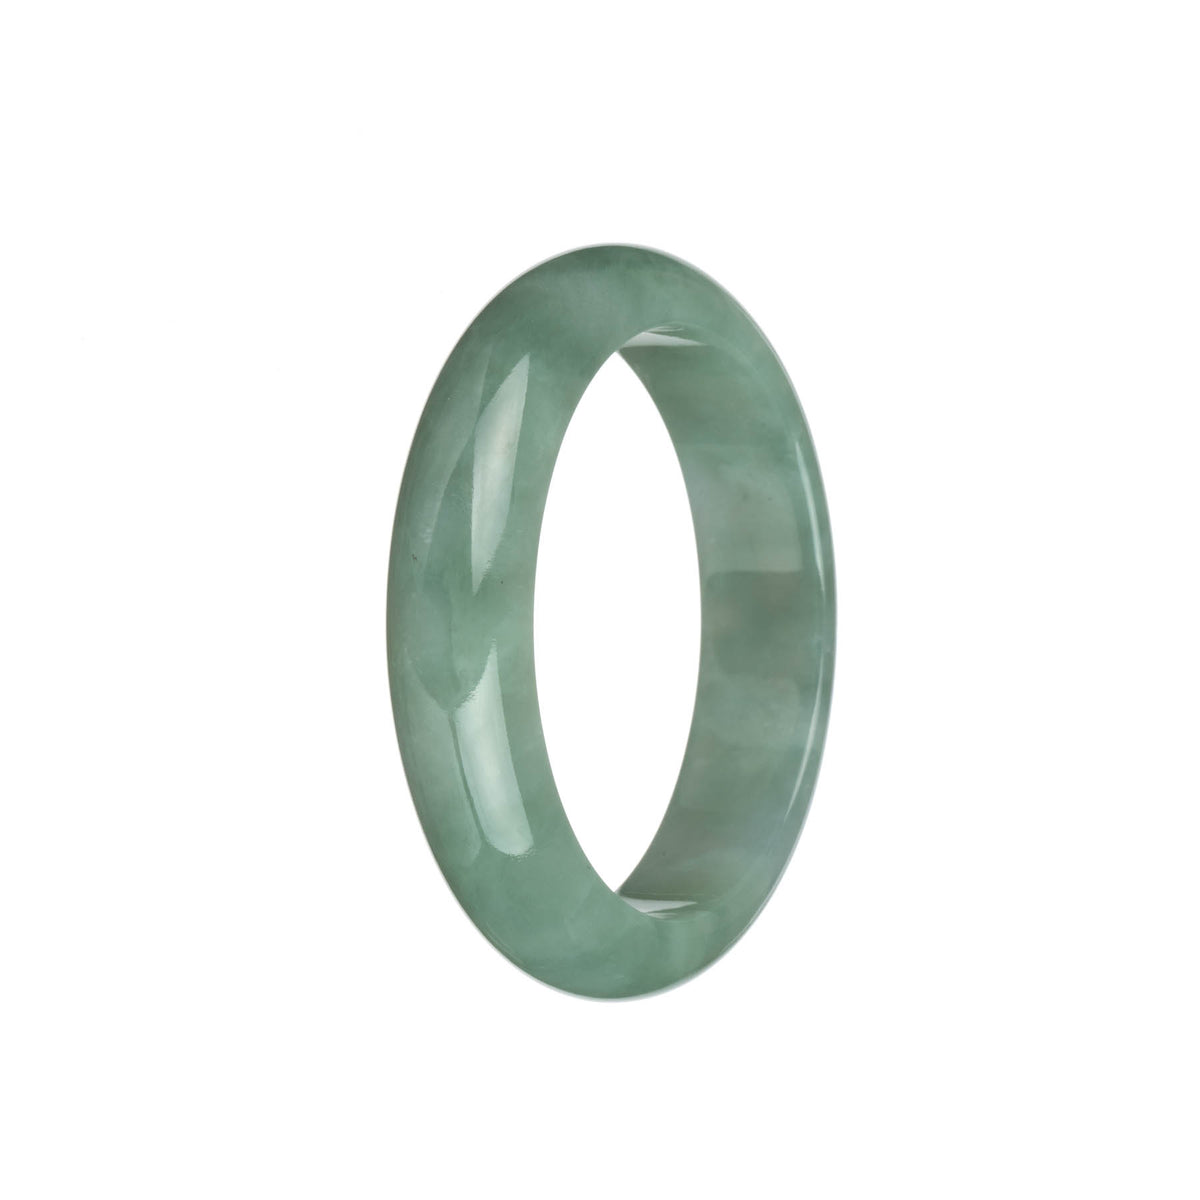 Genuine Grade A Green Jade Bangle Bracelet - 56mm Half Moon